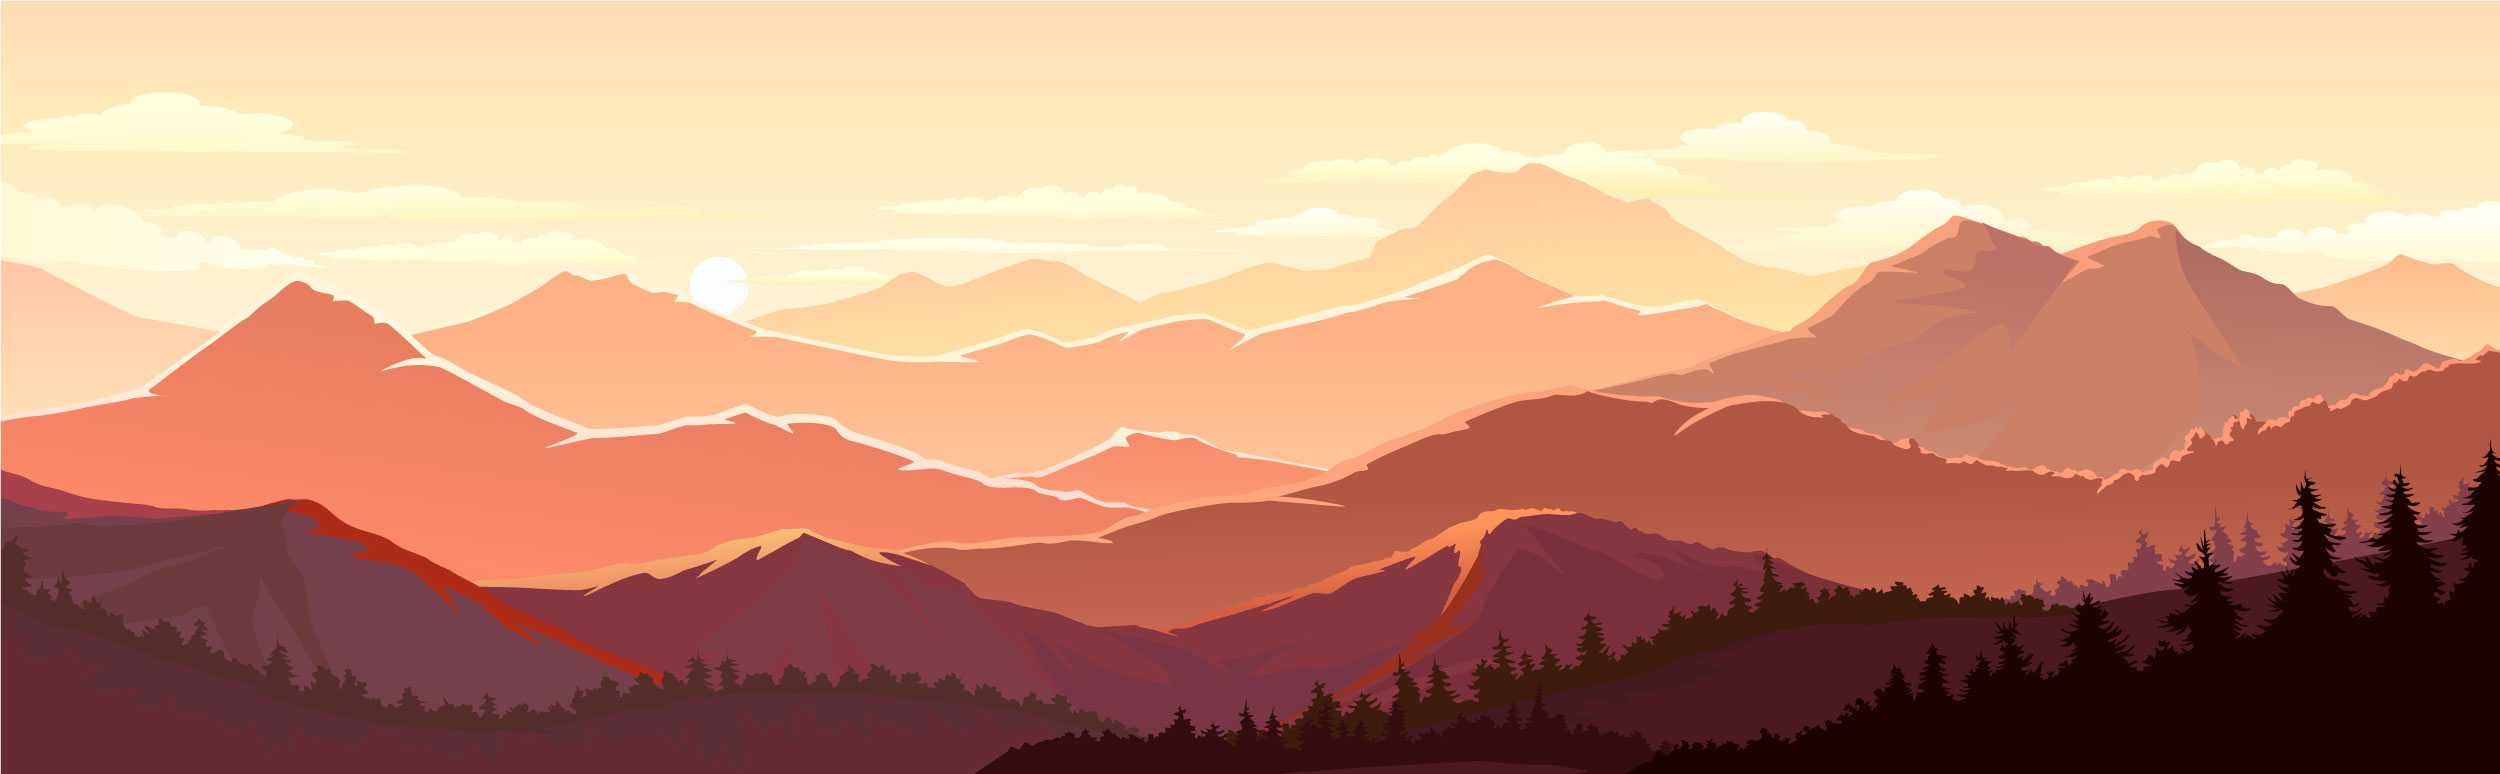 Illustration of a mountain range at sunset.